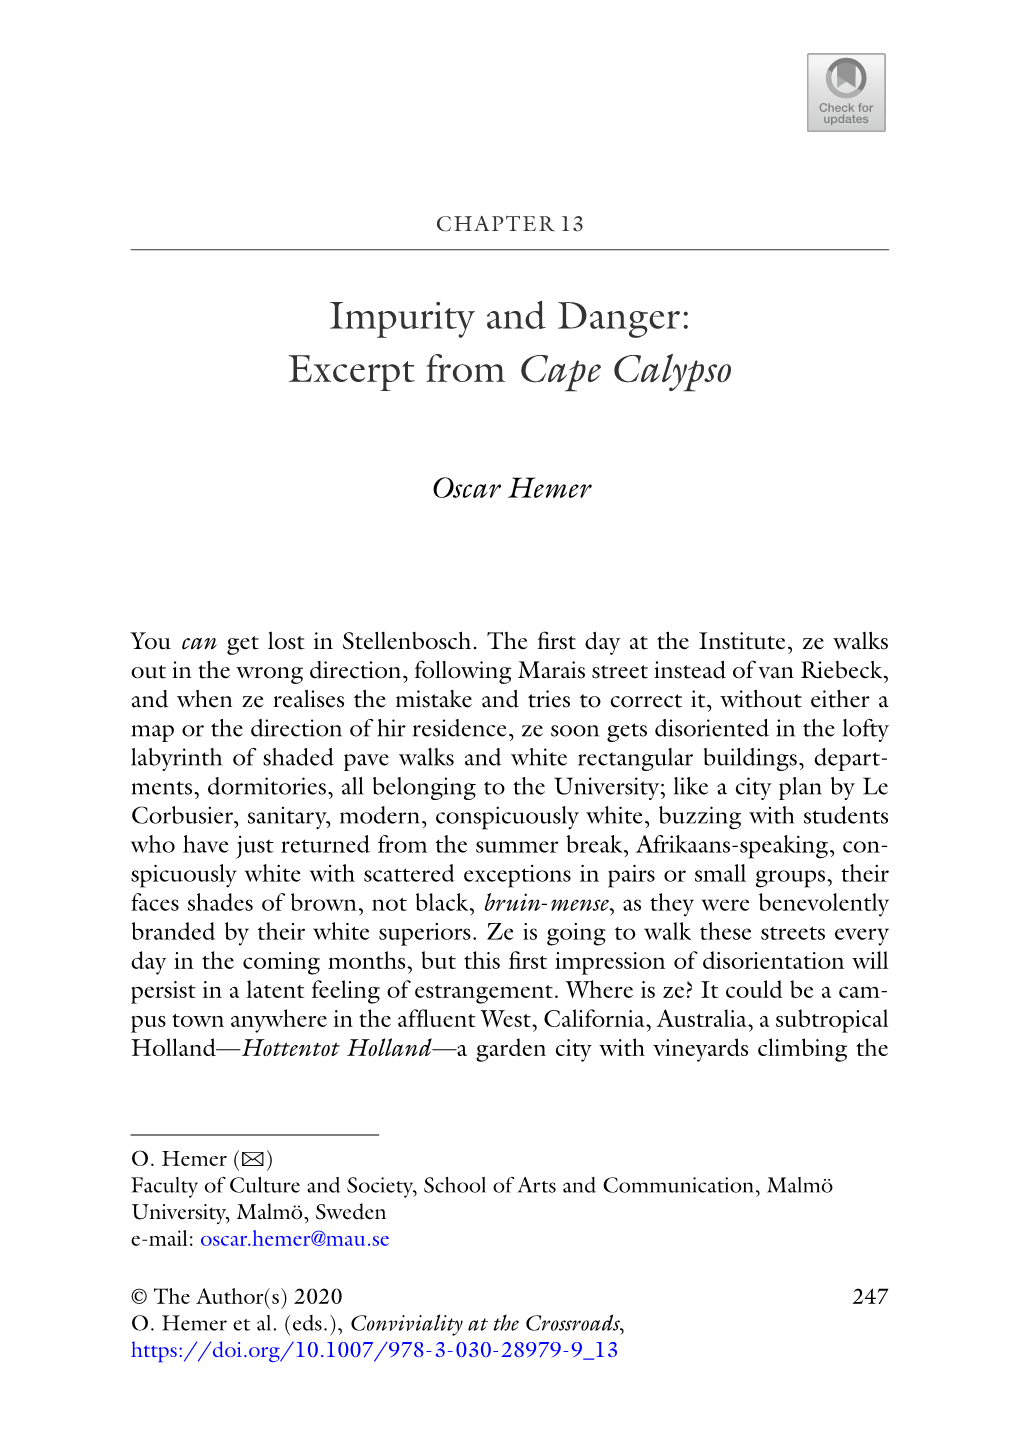 Impurity and Danger: Excerpt from Cape Calypso